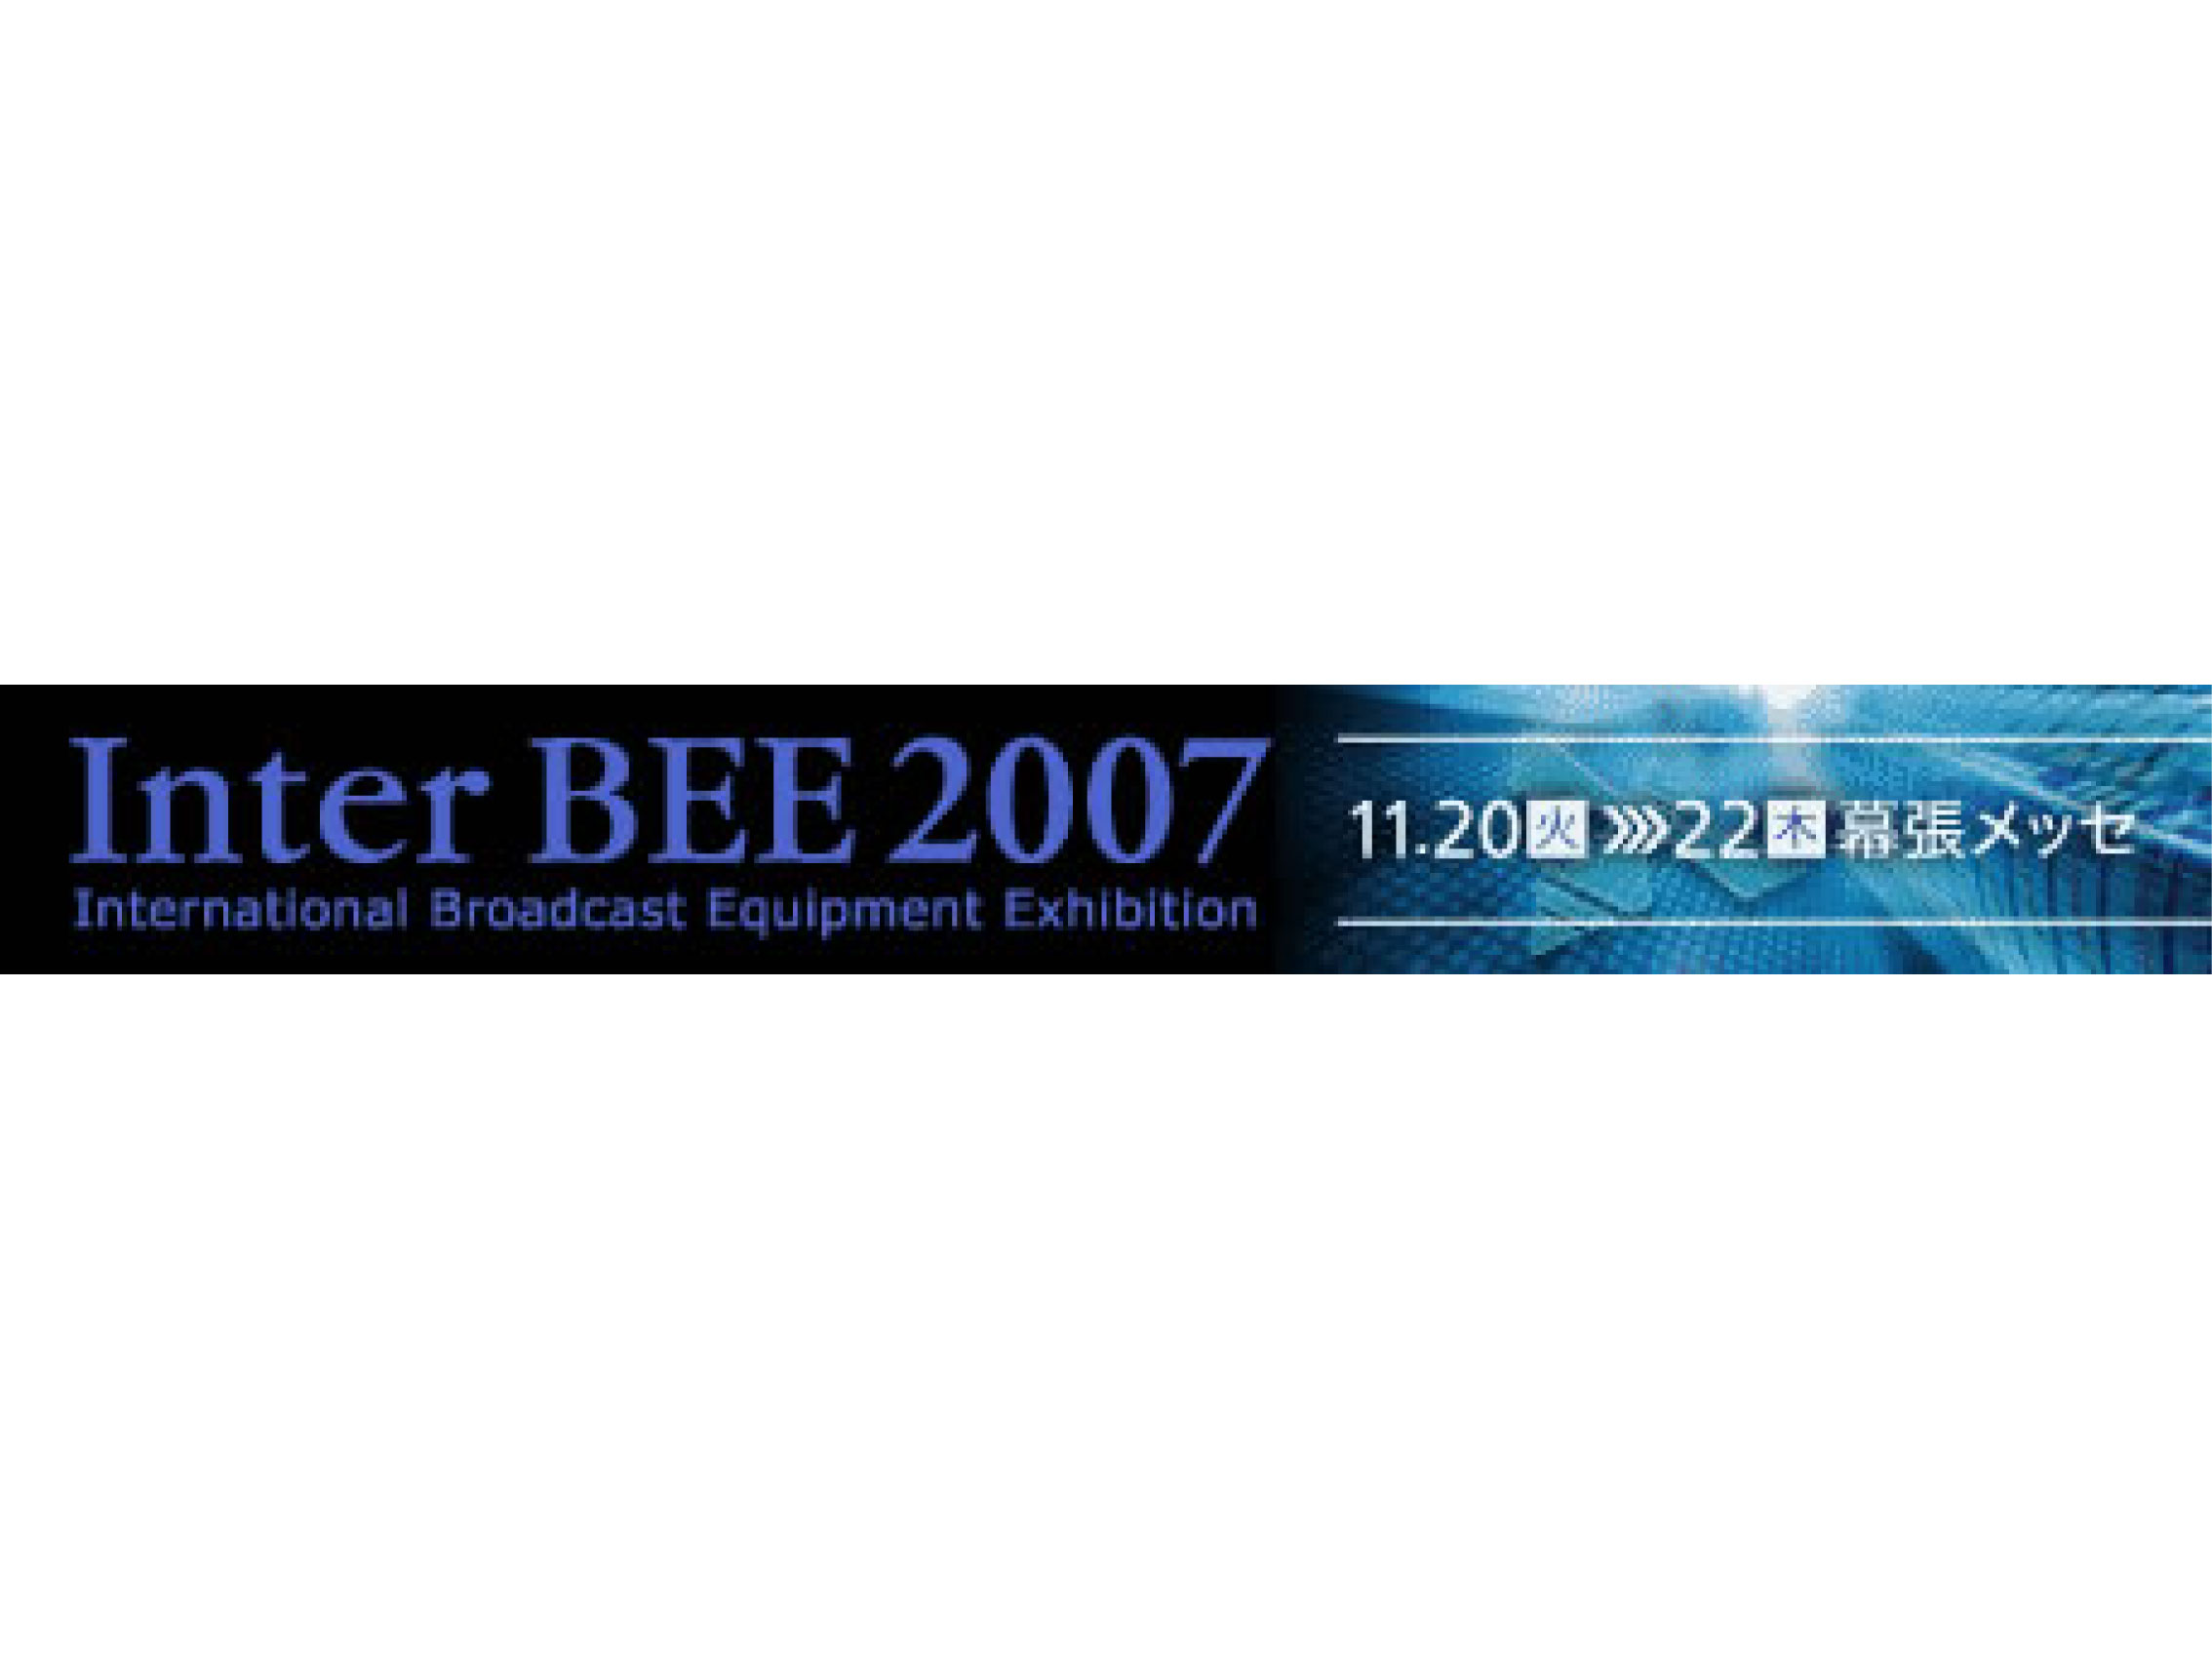 interbee2007_technohouse